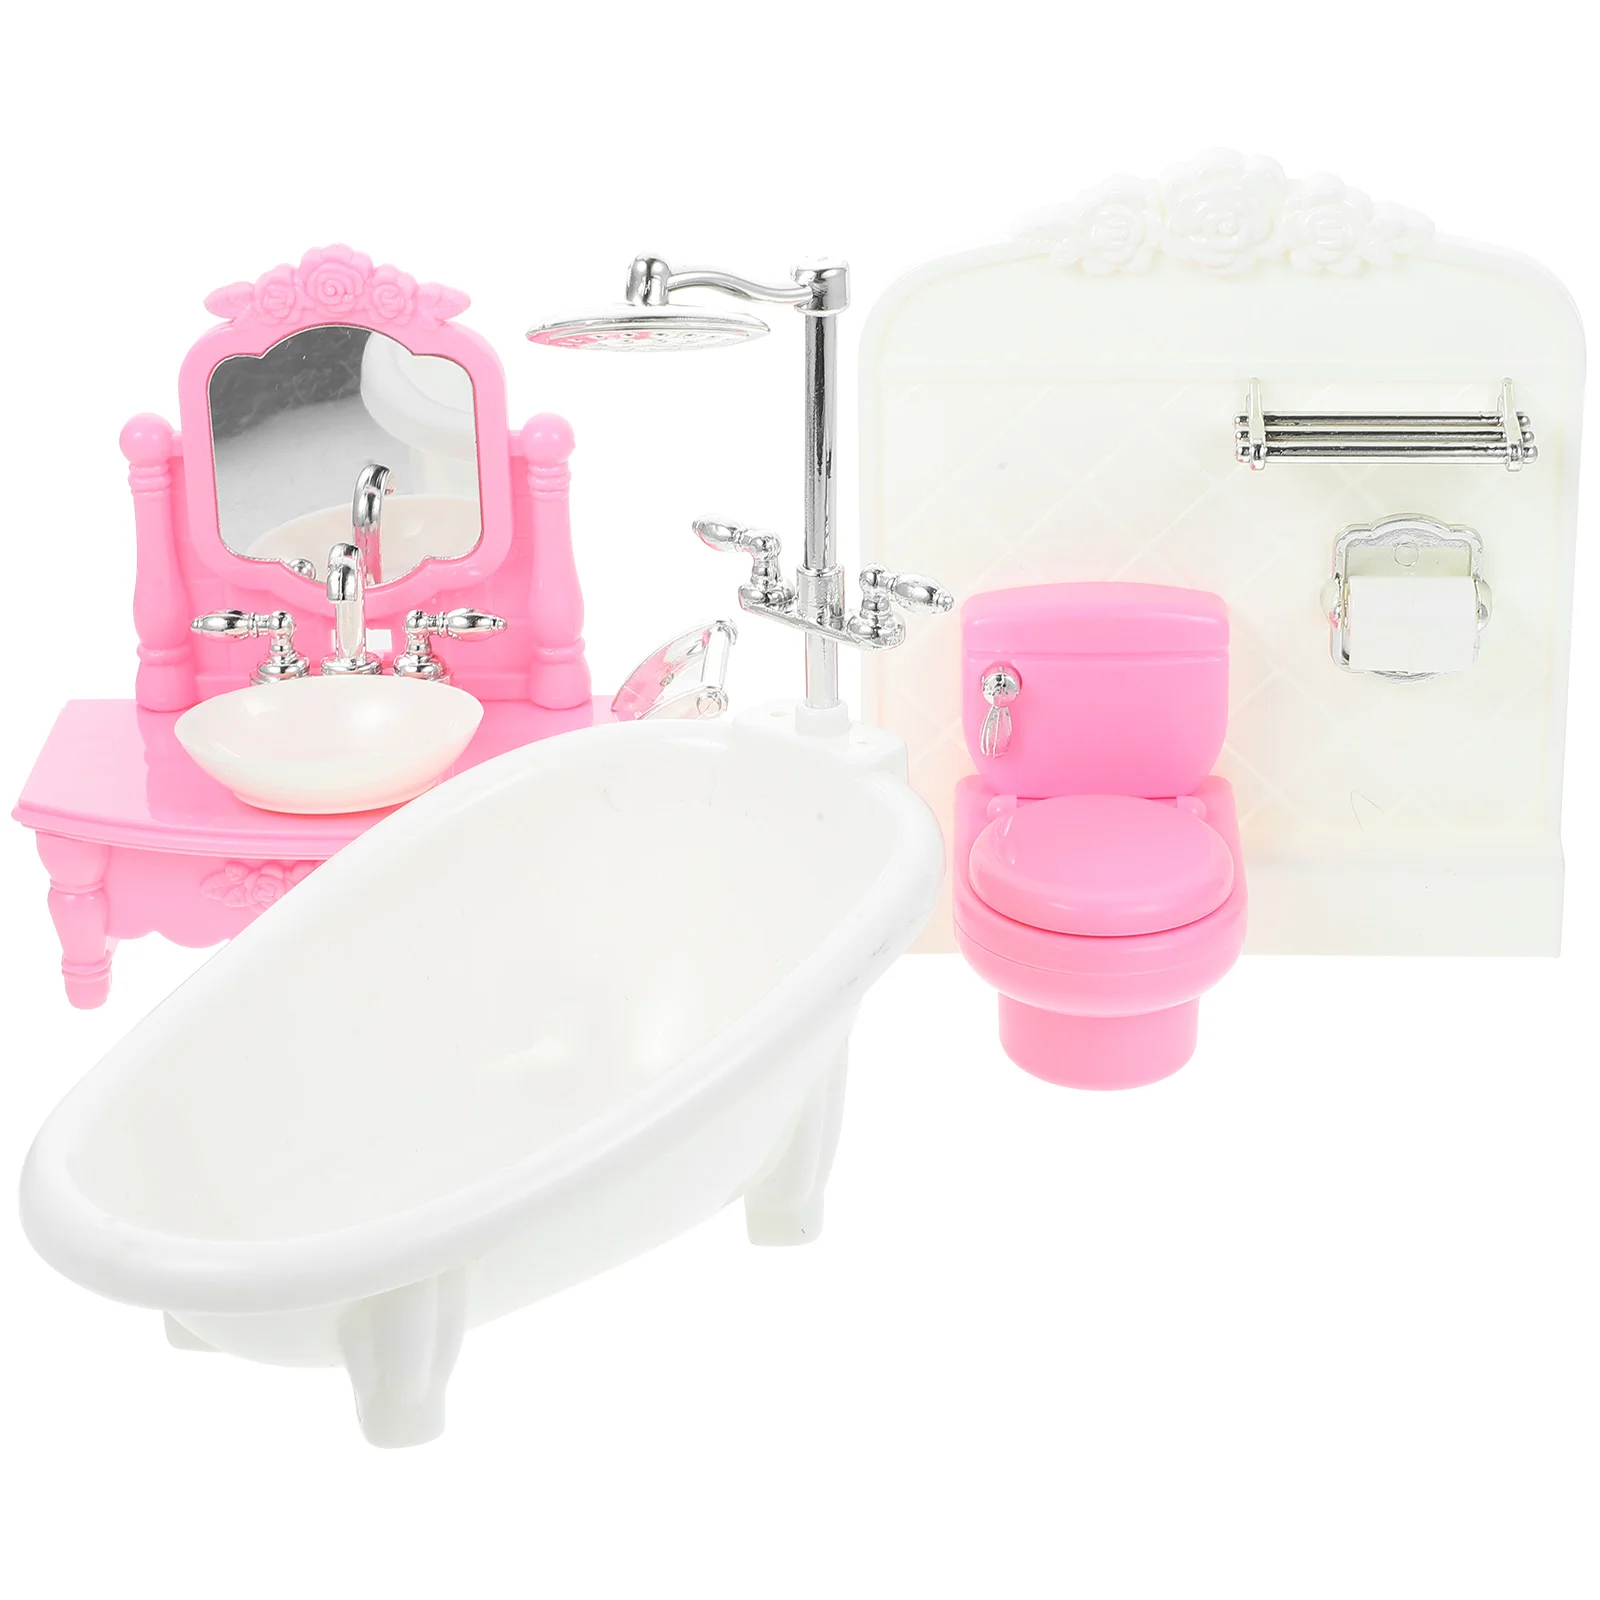 

Mini Sink Miniature Scene Model Home Accents Decor Kids House Accessories Bathroom Toy Ornament Playhouse Adornment